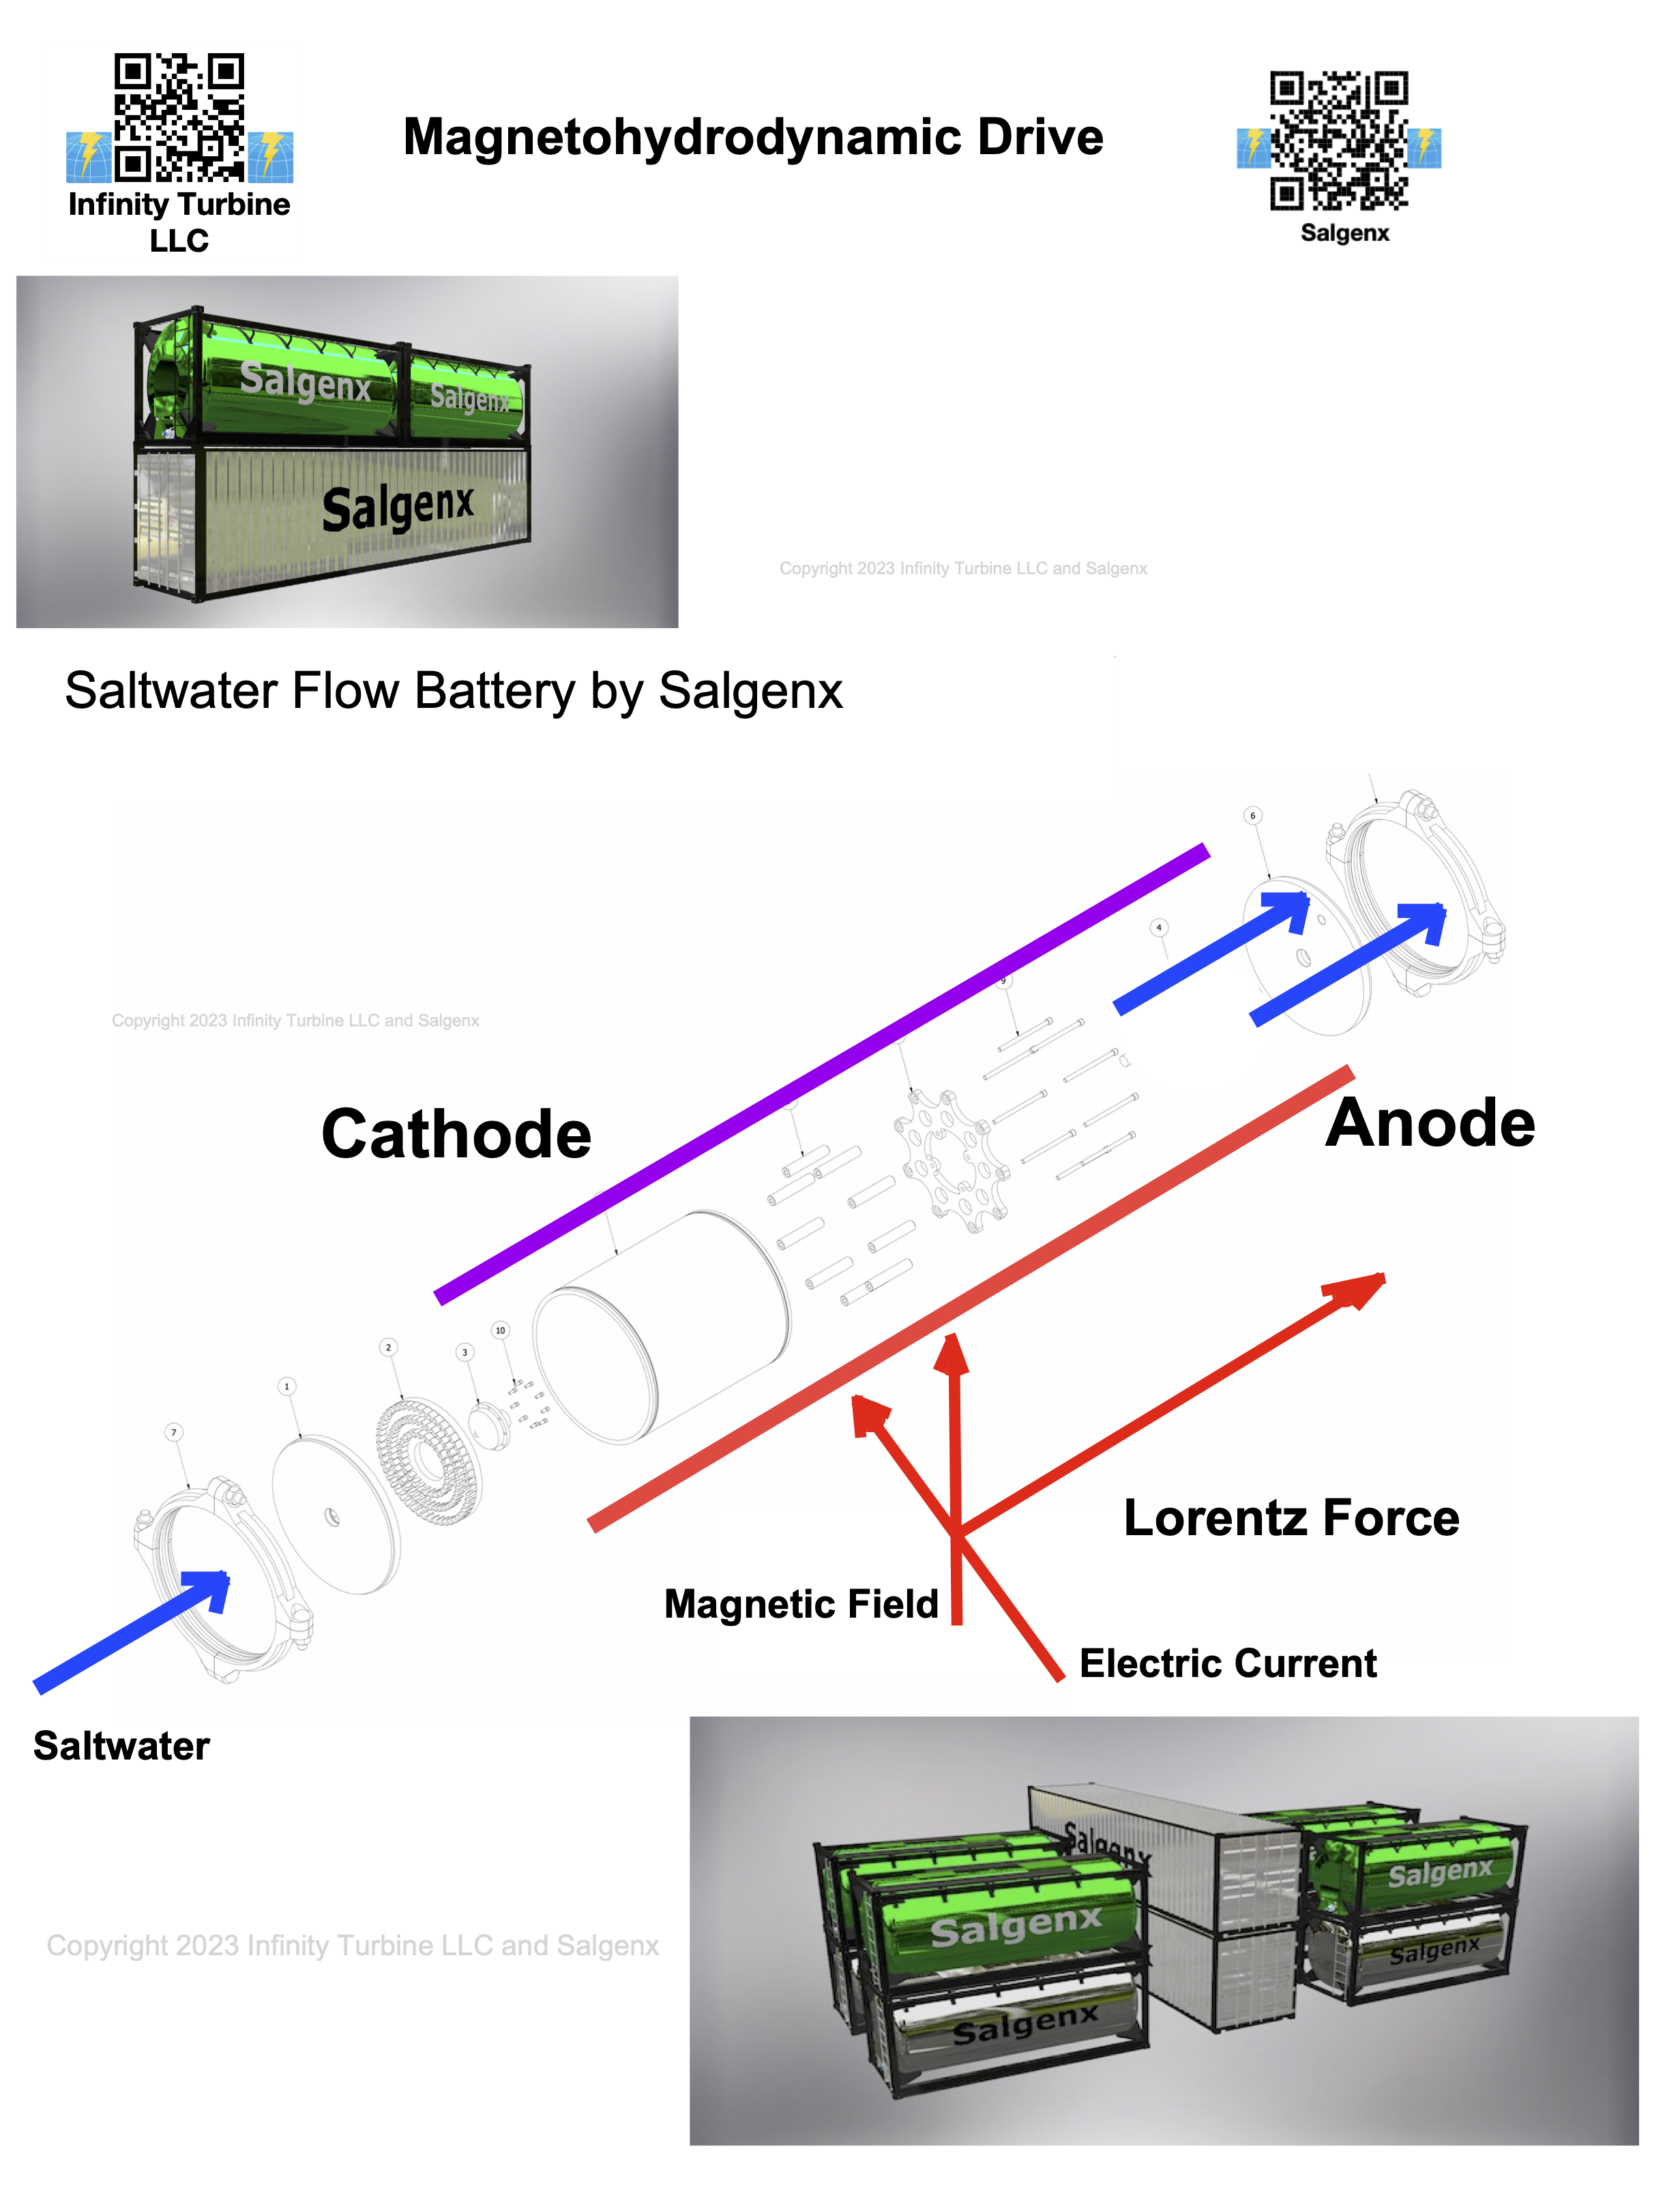 Salgenx magnetohydrodynamic mhd pump drive using in-situ Lorentz force to move saltwater